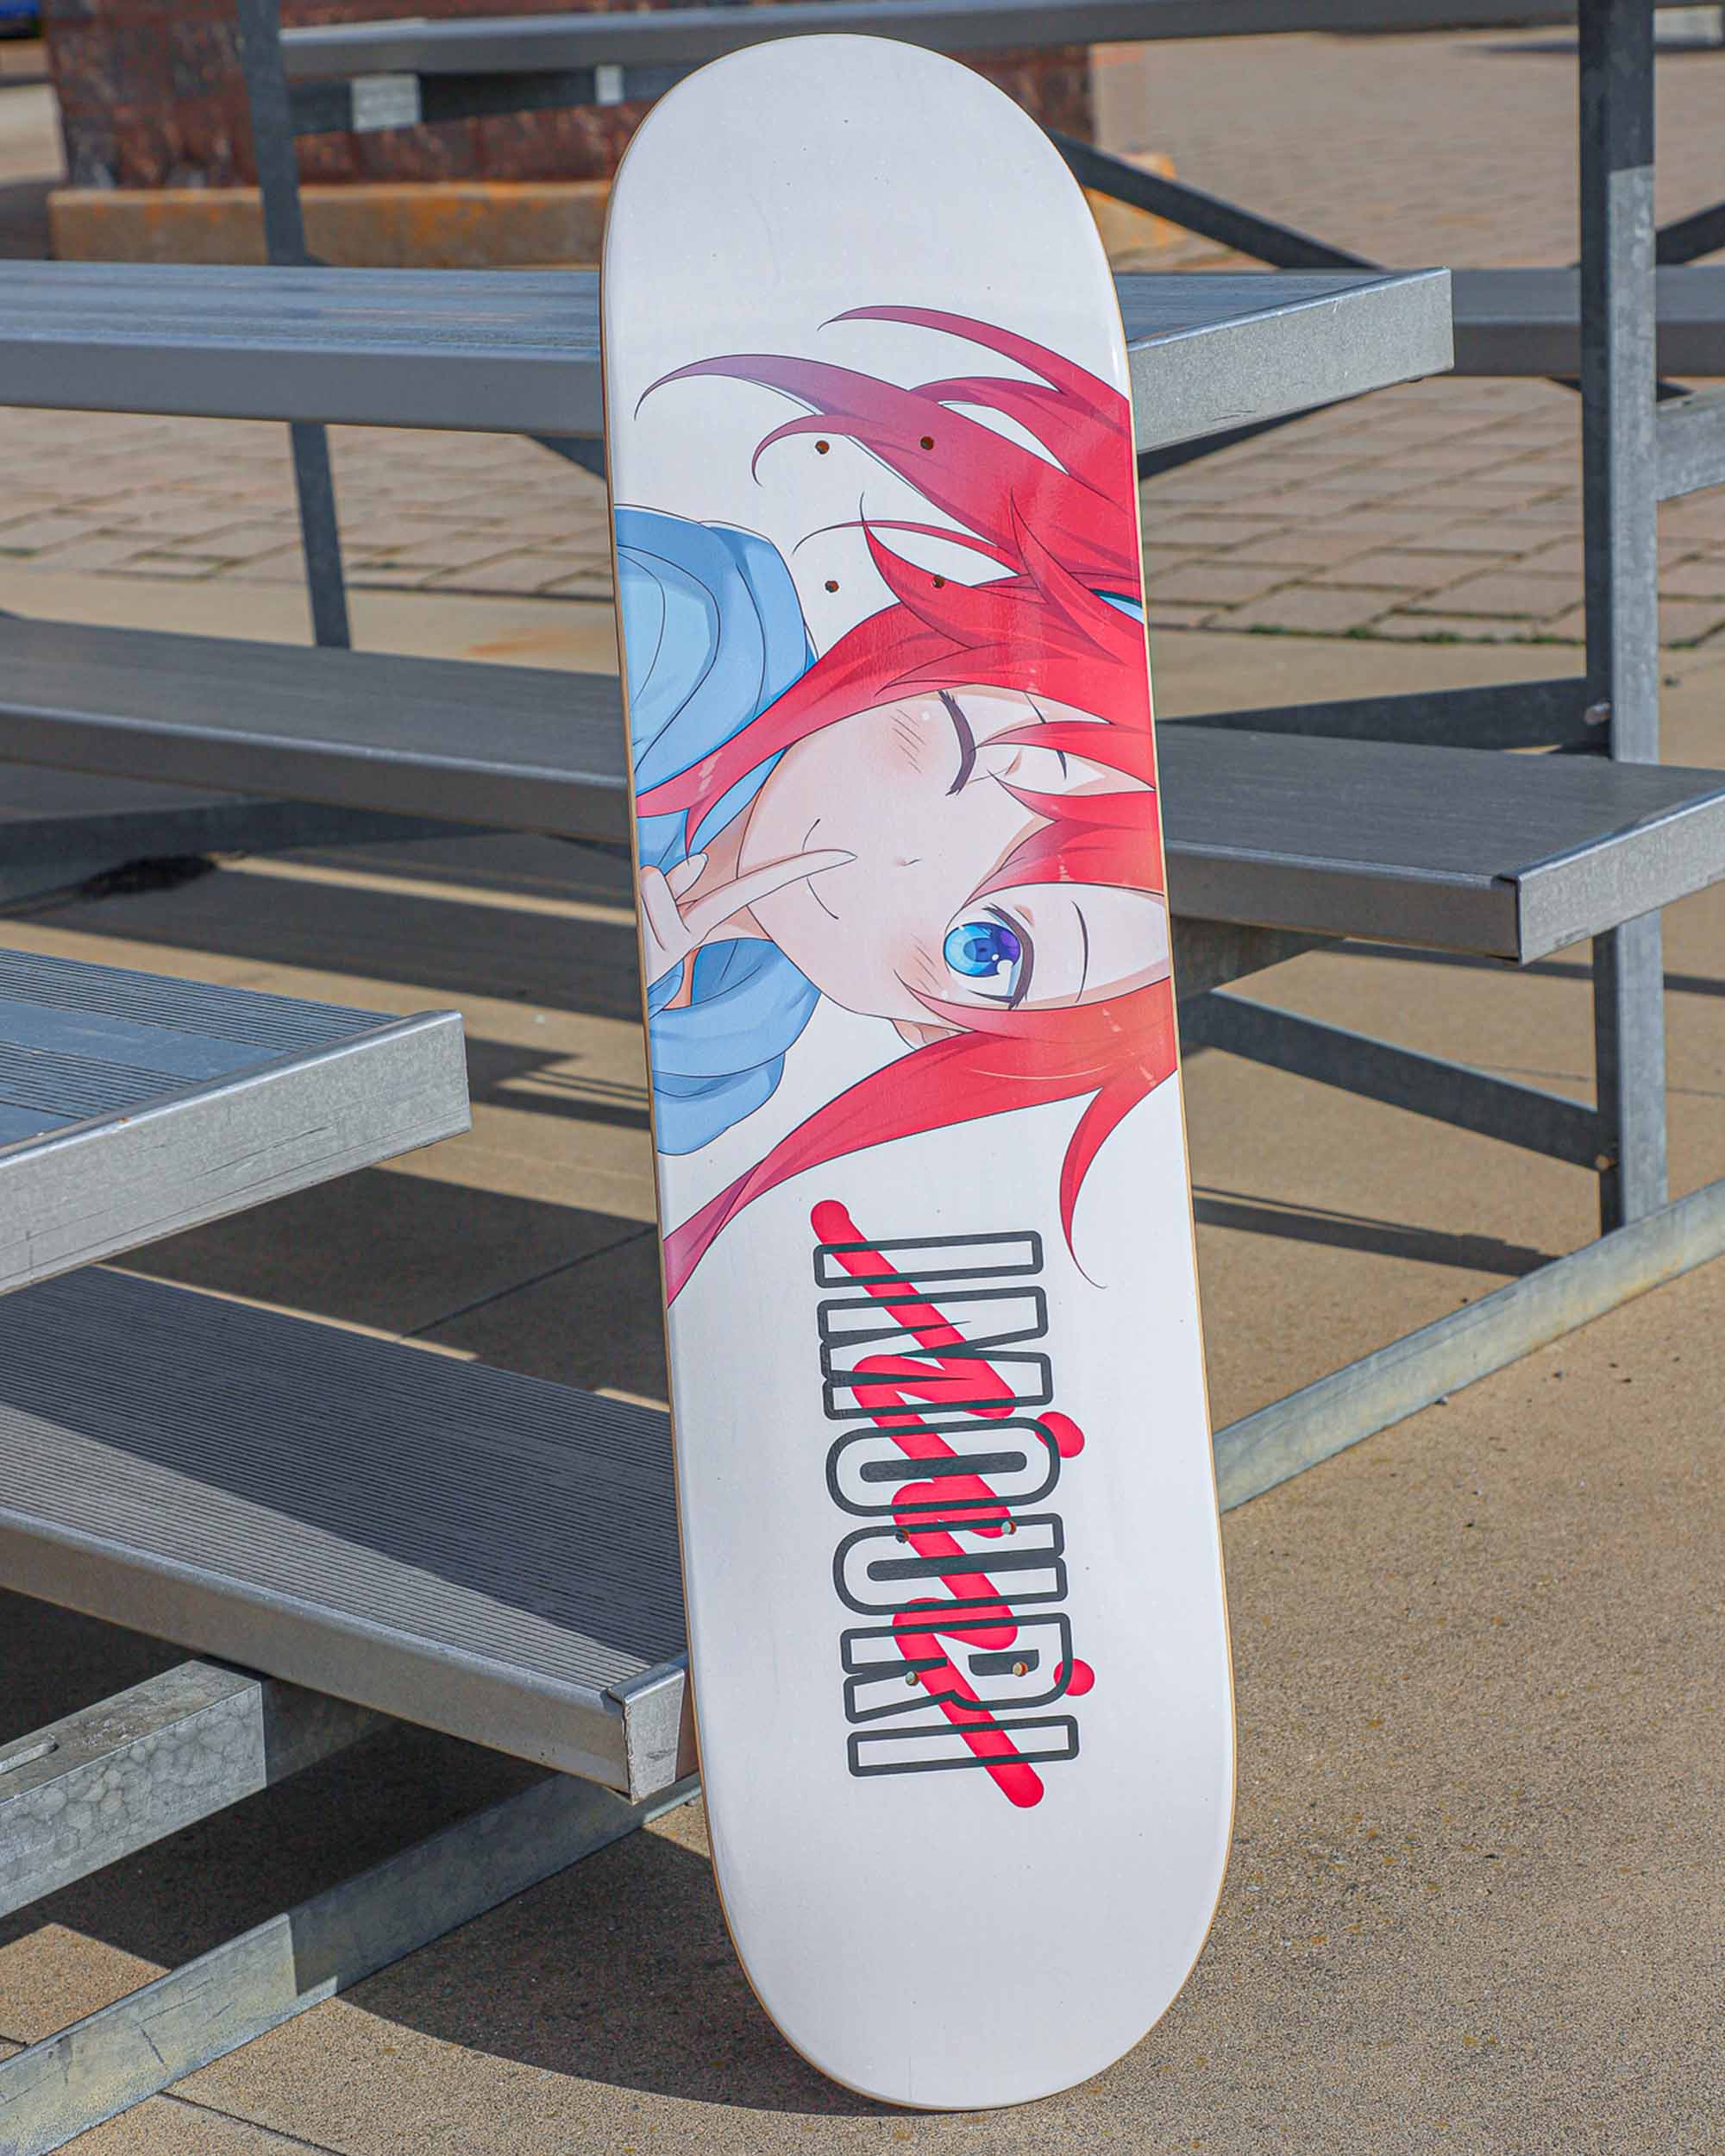 Anime Skateboard Deck Designs